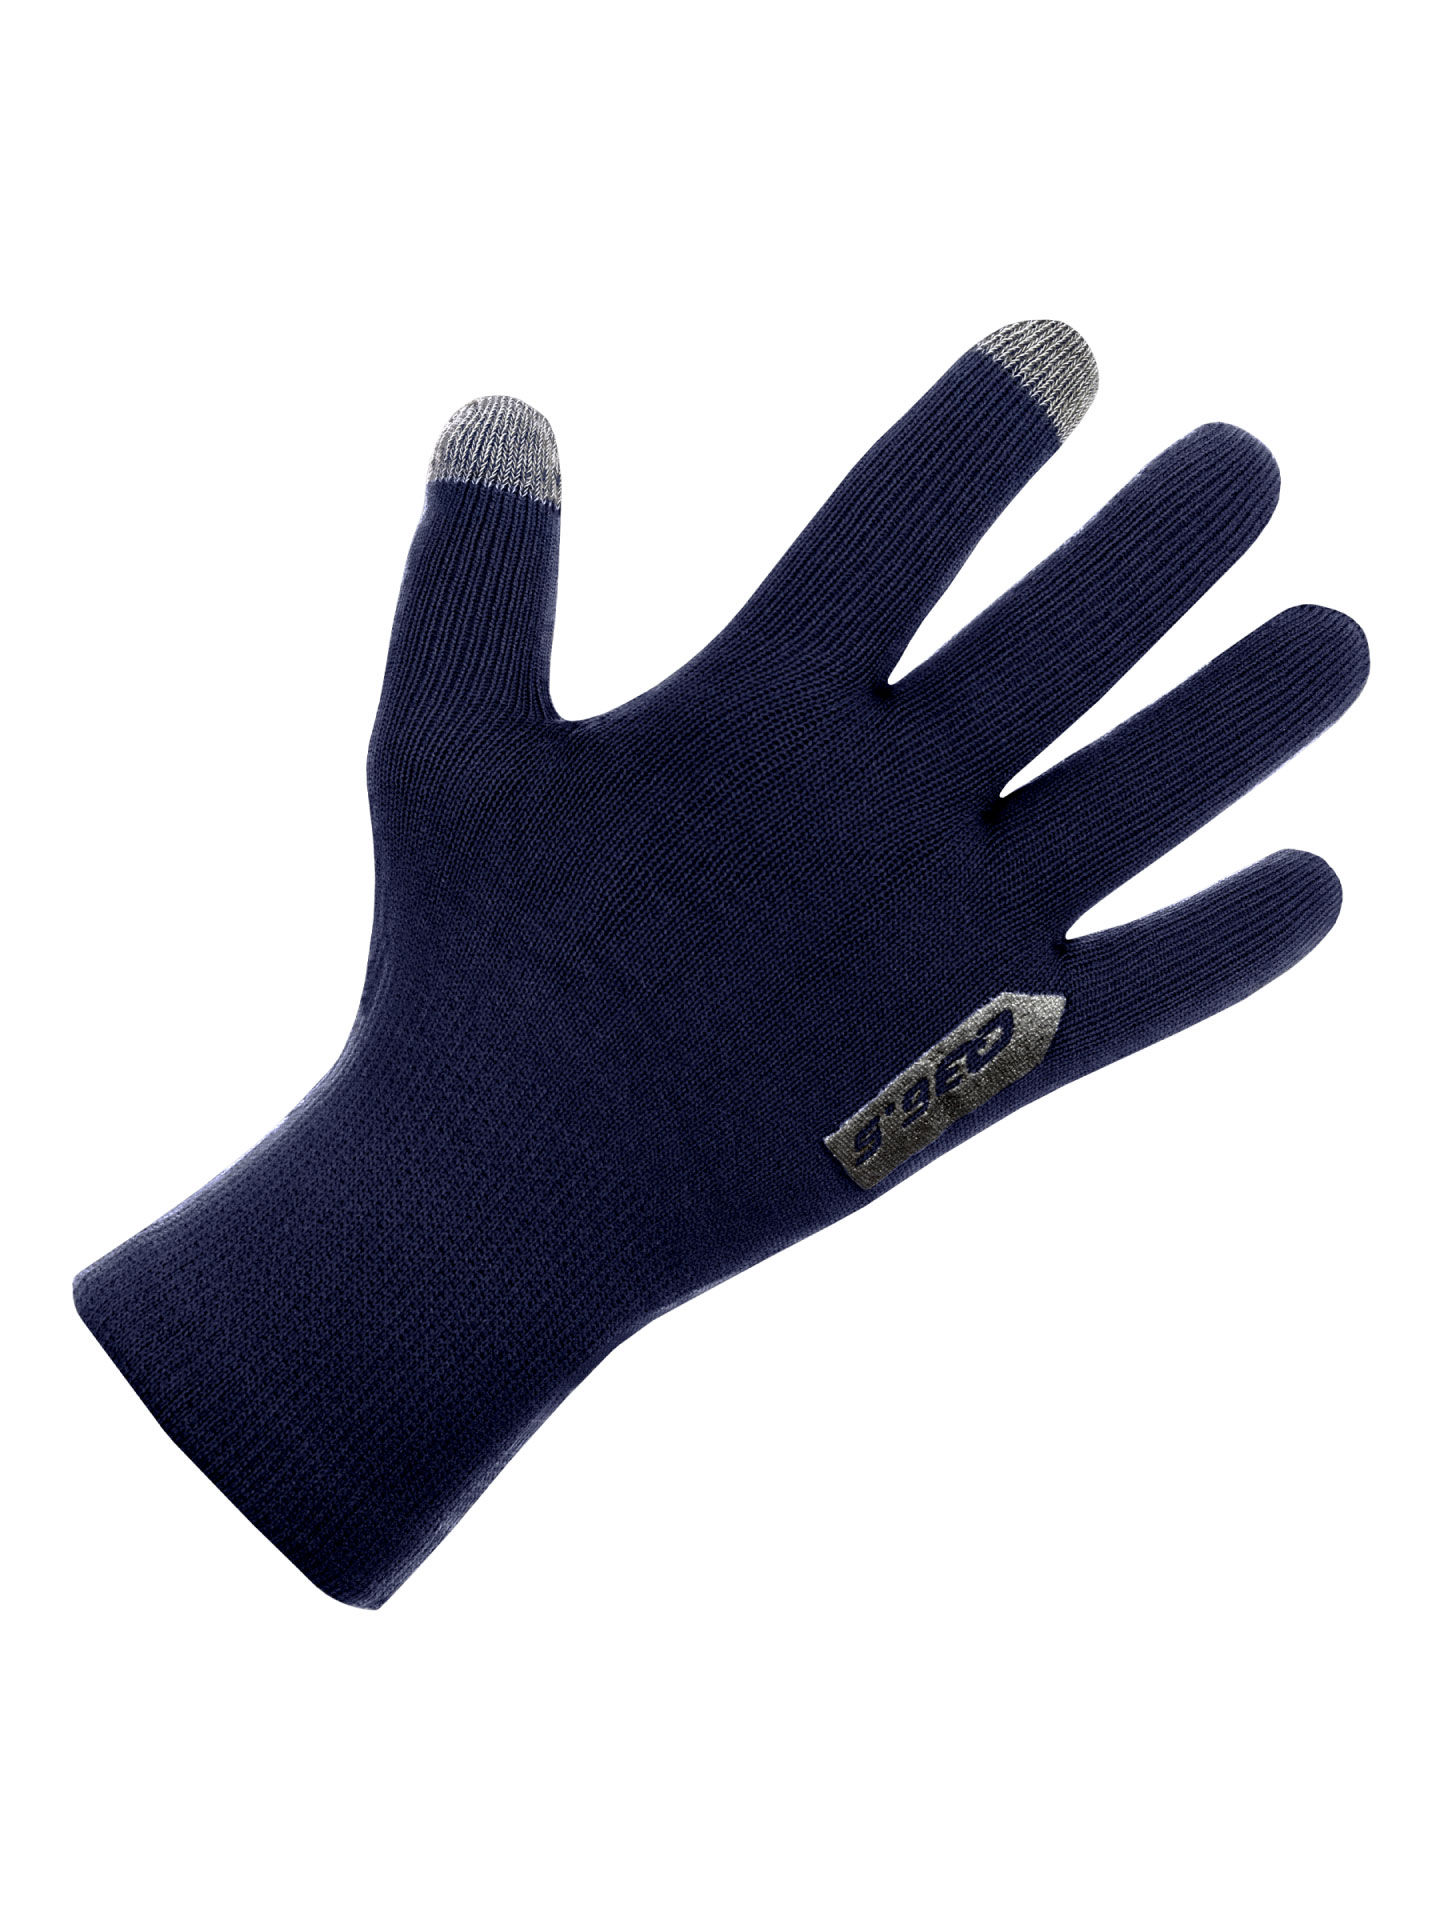 Women's Adventure winter jacket navy blue • Q36.5